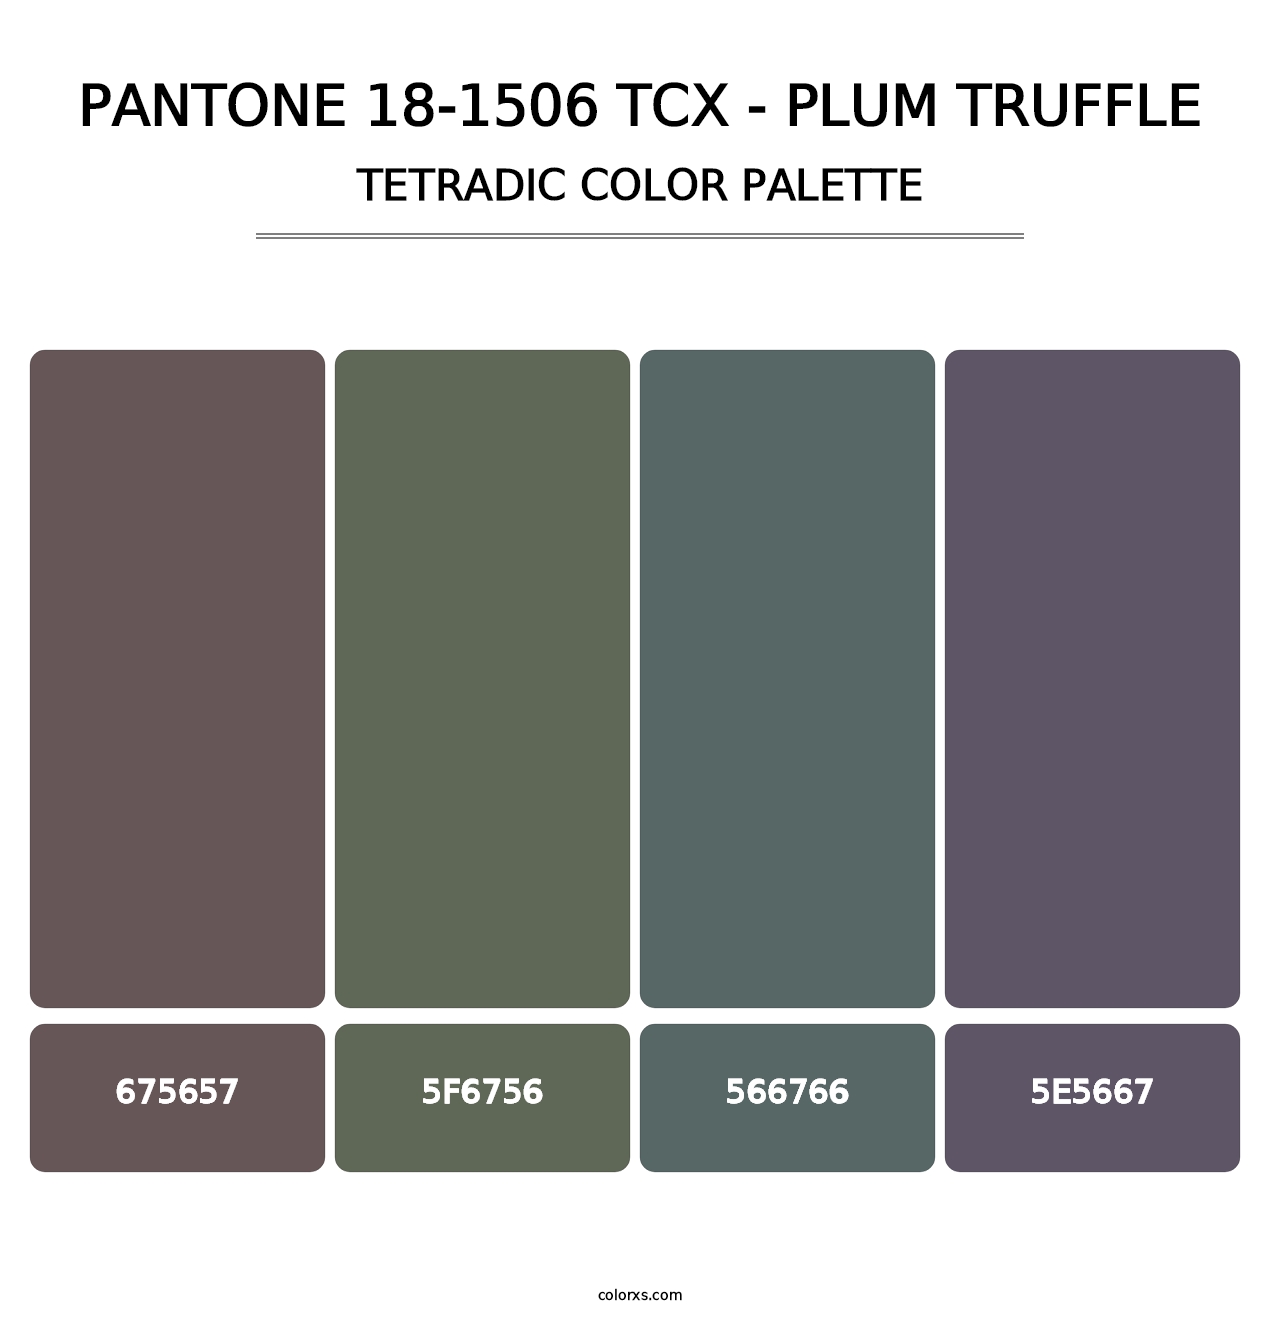 PANTONE 18-1506 TCX - Plum Truffle - Tetradic Color Palette